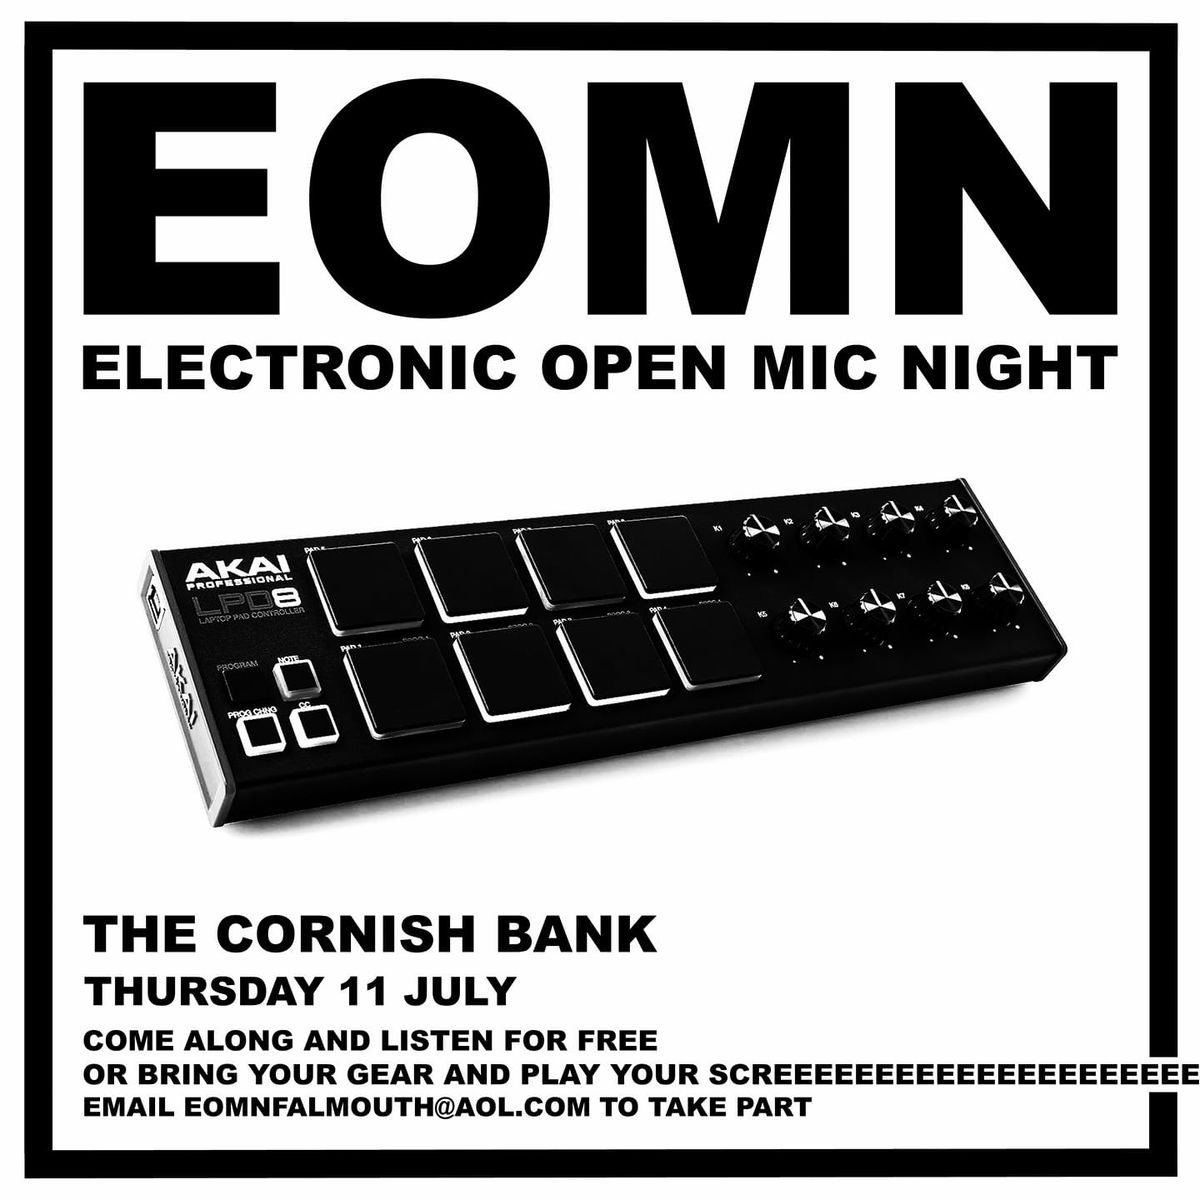 EOMN: Electronic Open Mic Night